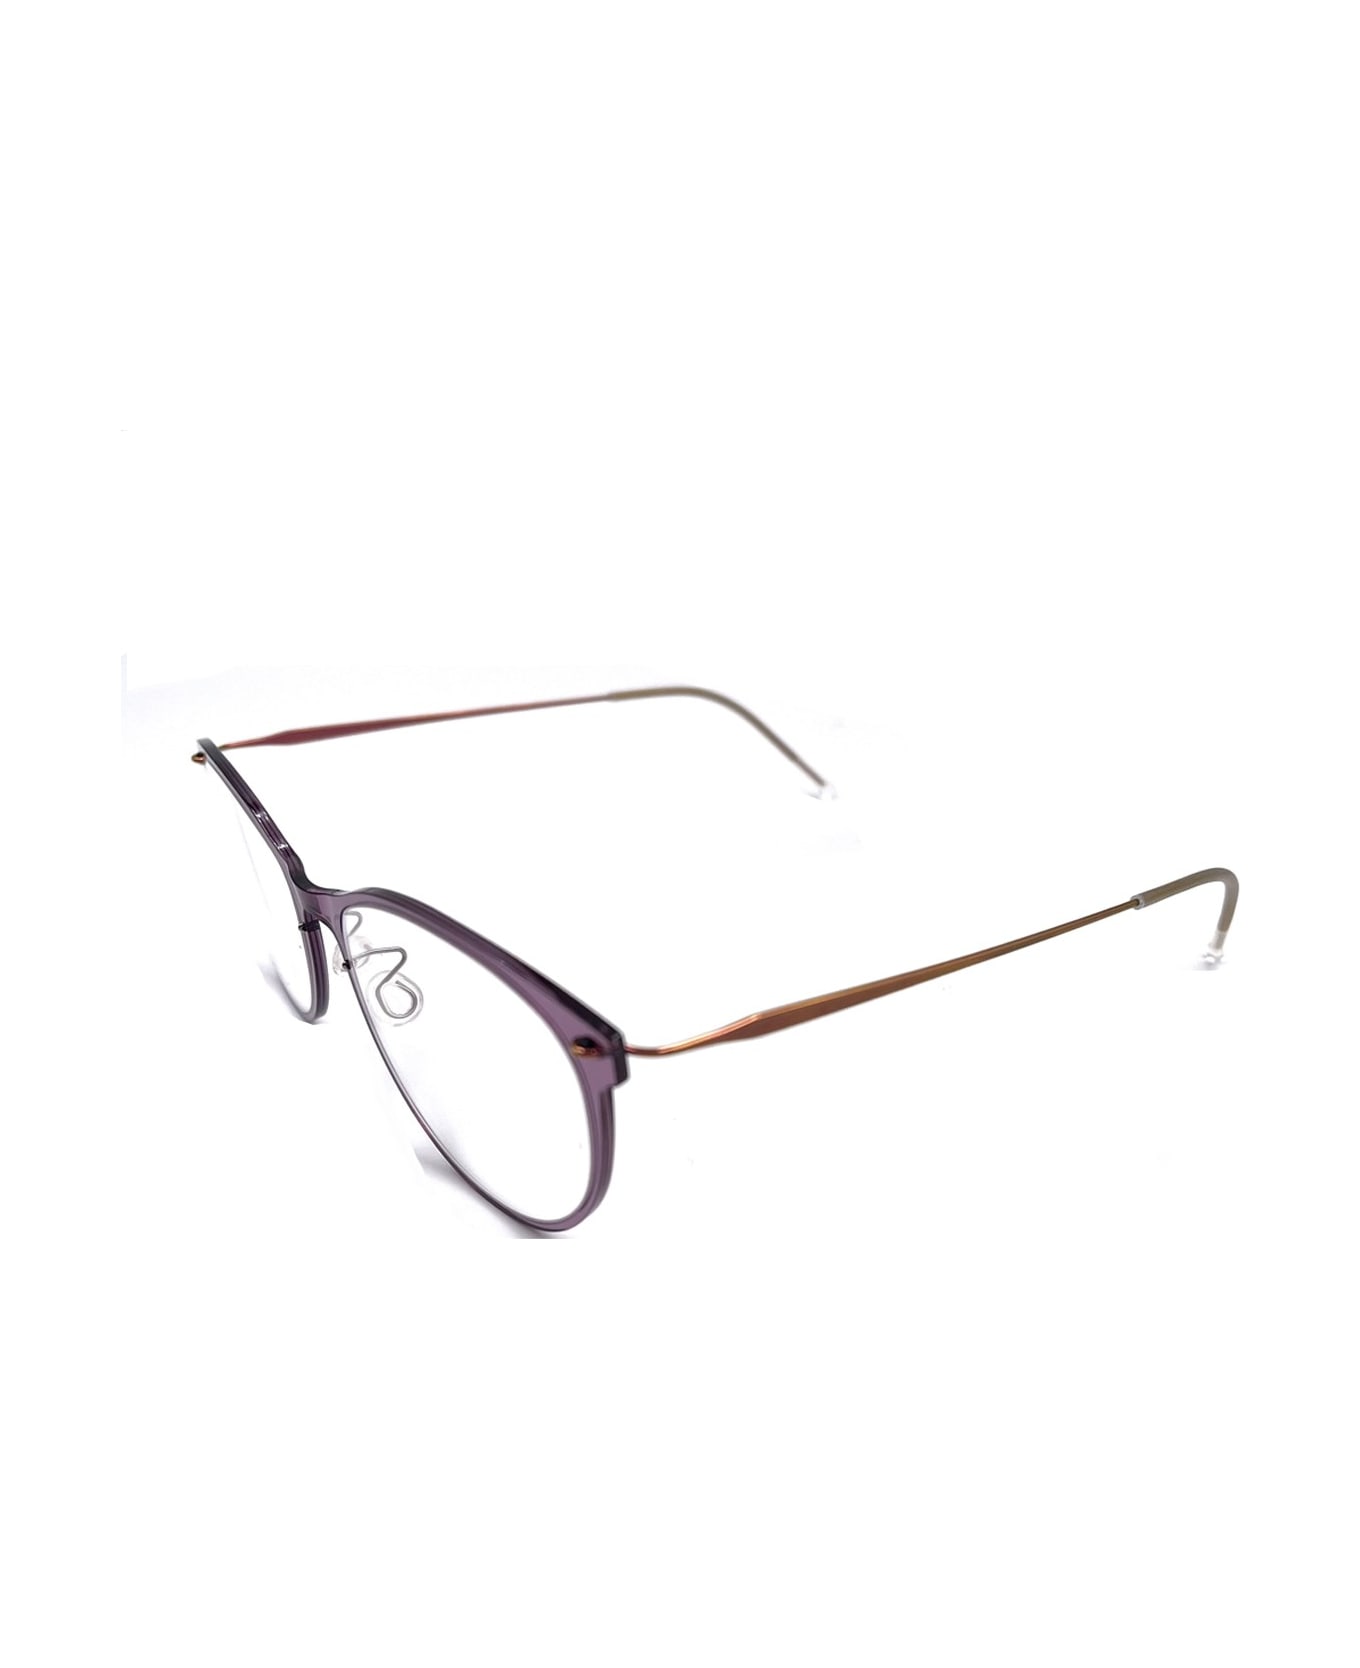 LINDBERG N.o.w. 6520 Glasses - Viola アイウェア